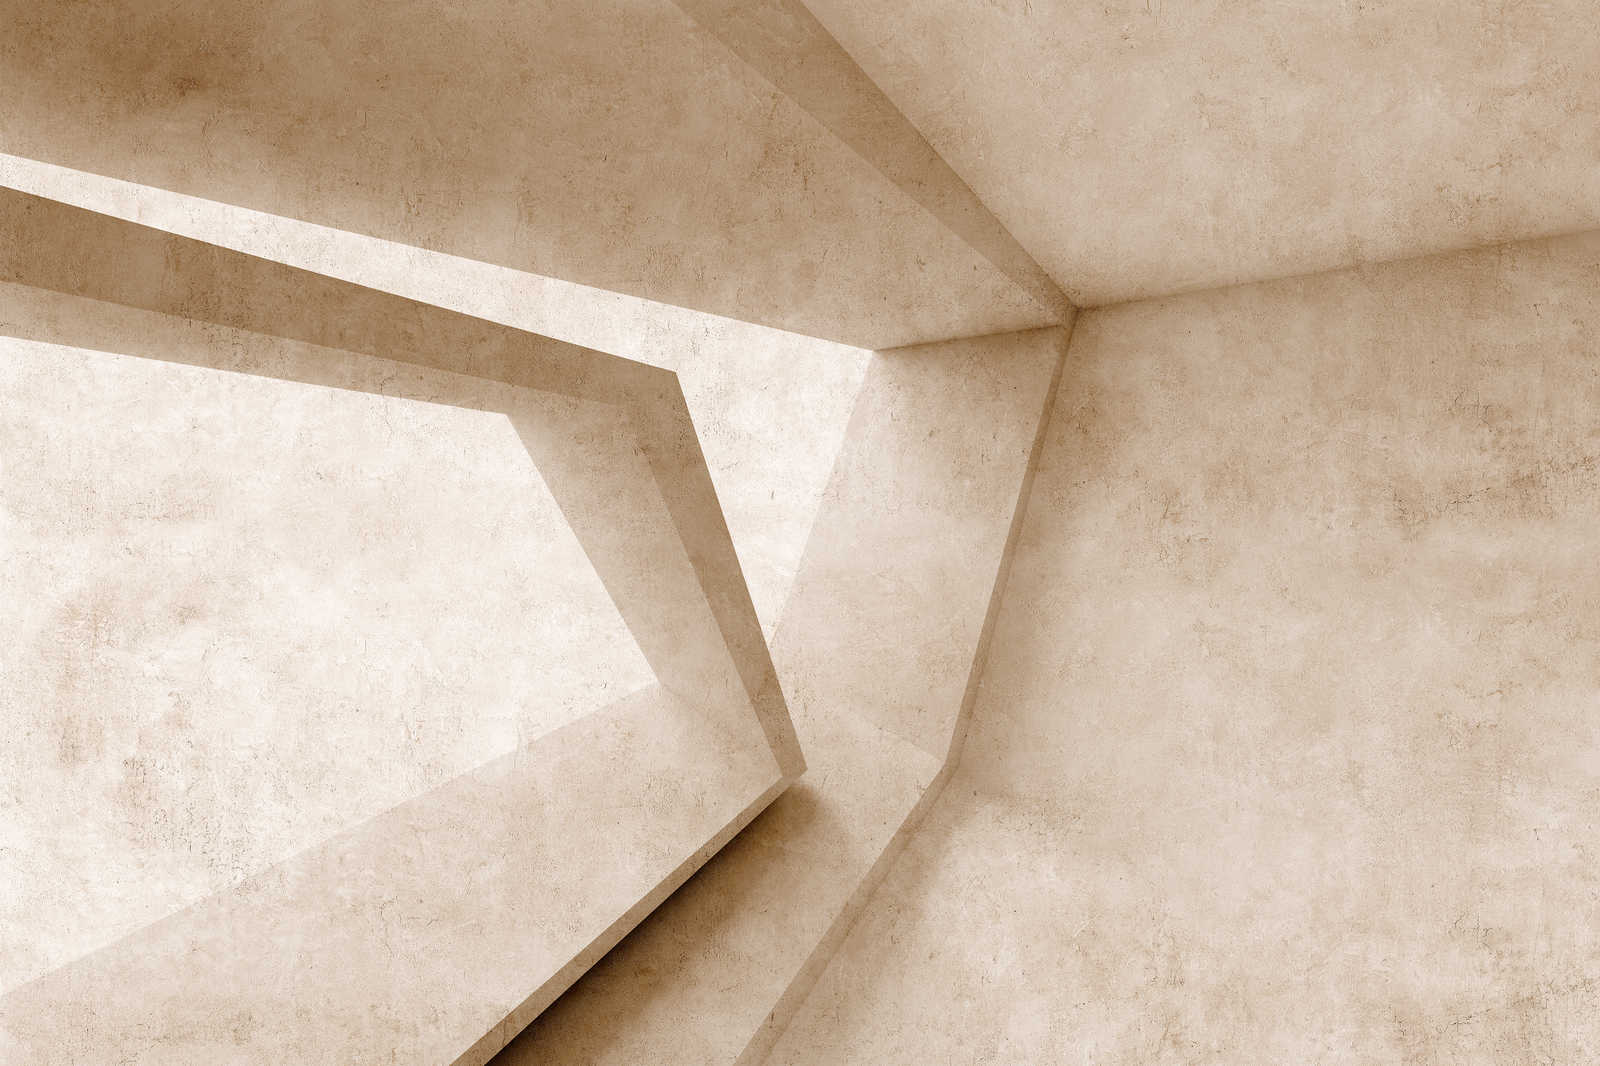             Futura 1 - Beton Leinwandbild 3D Muster – 1,20 m x 0,80 m
        